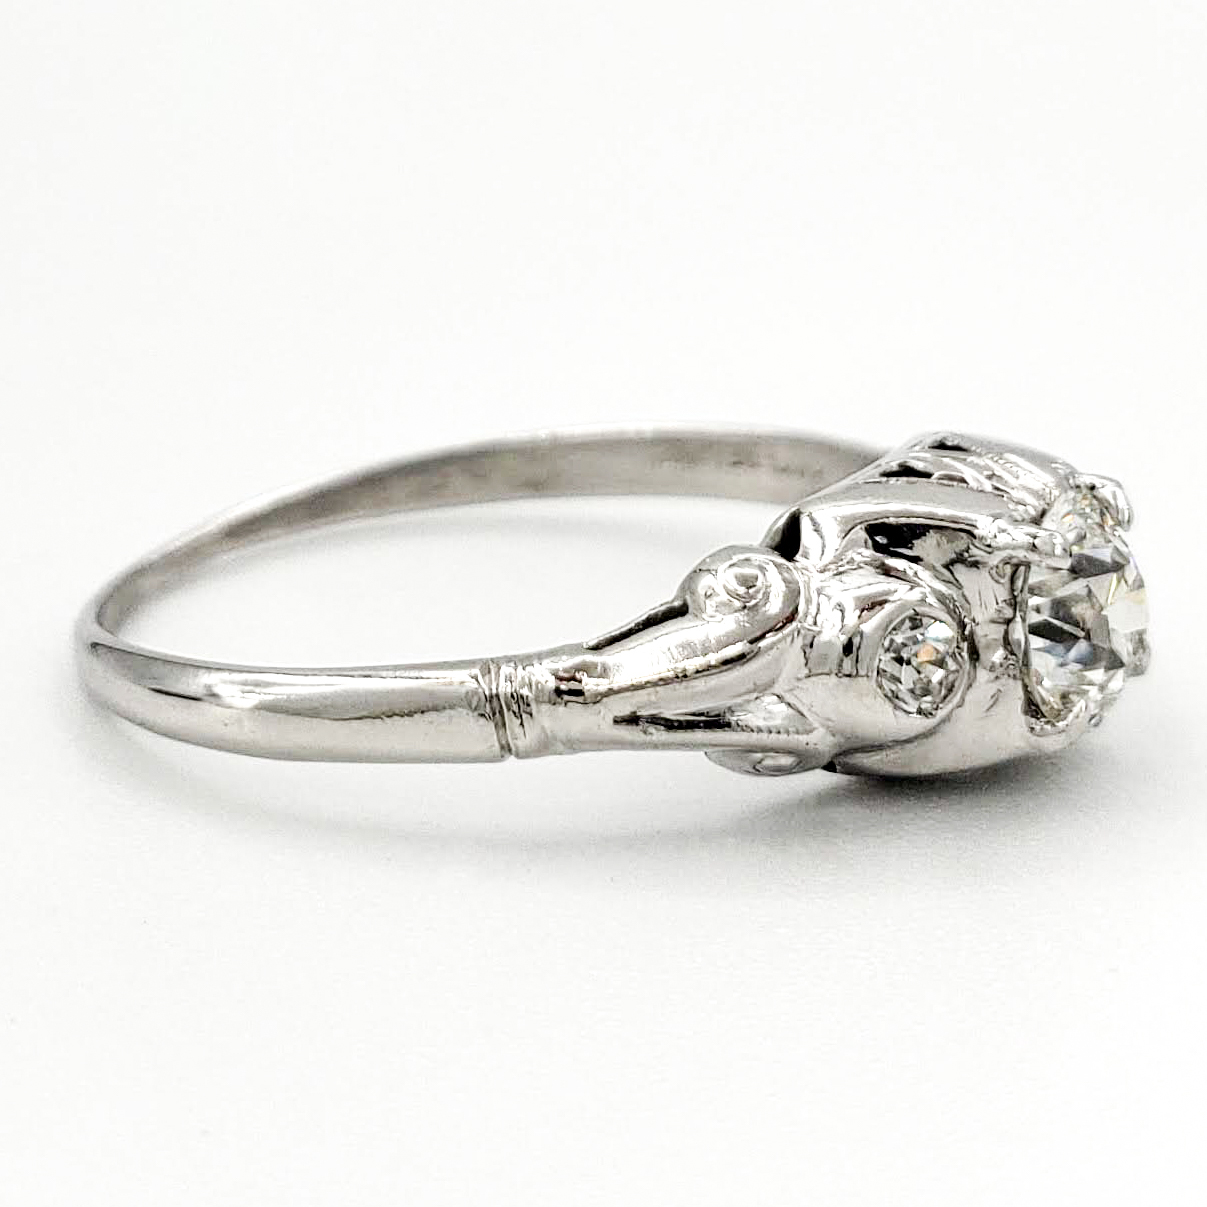 vintage-platinum-engagement-ring-with-0-39-carat-old-european-cut-diamond-egl-h-vs2